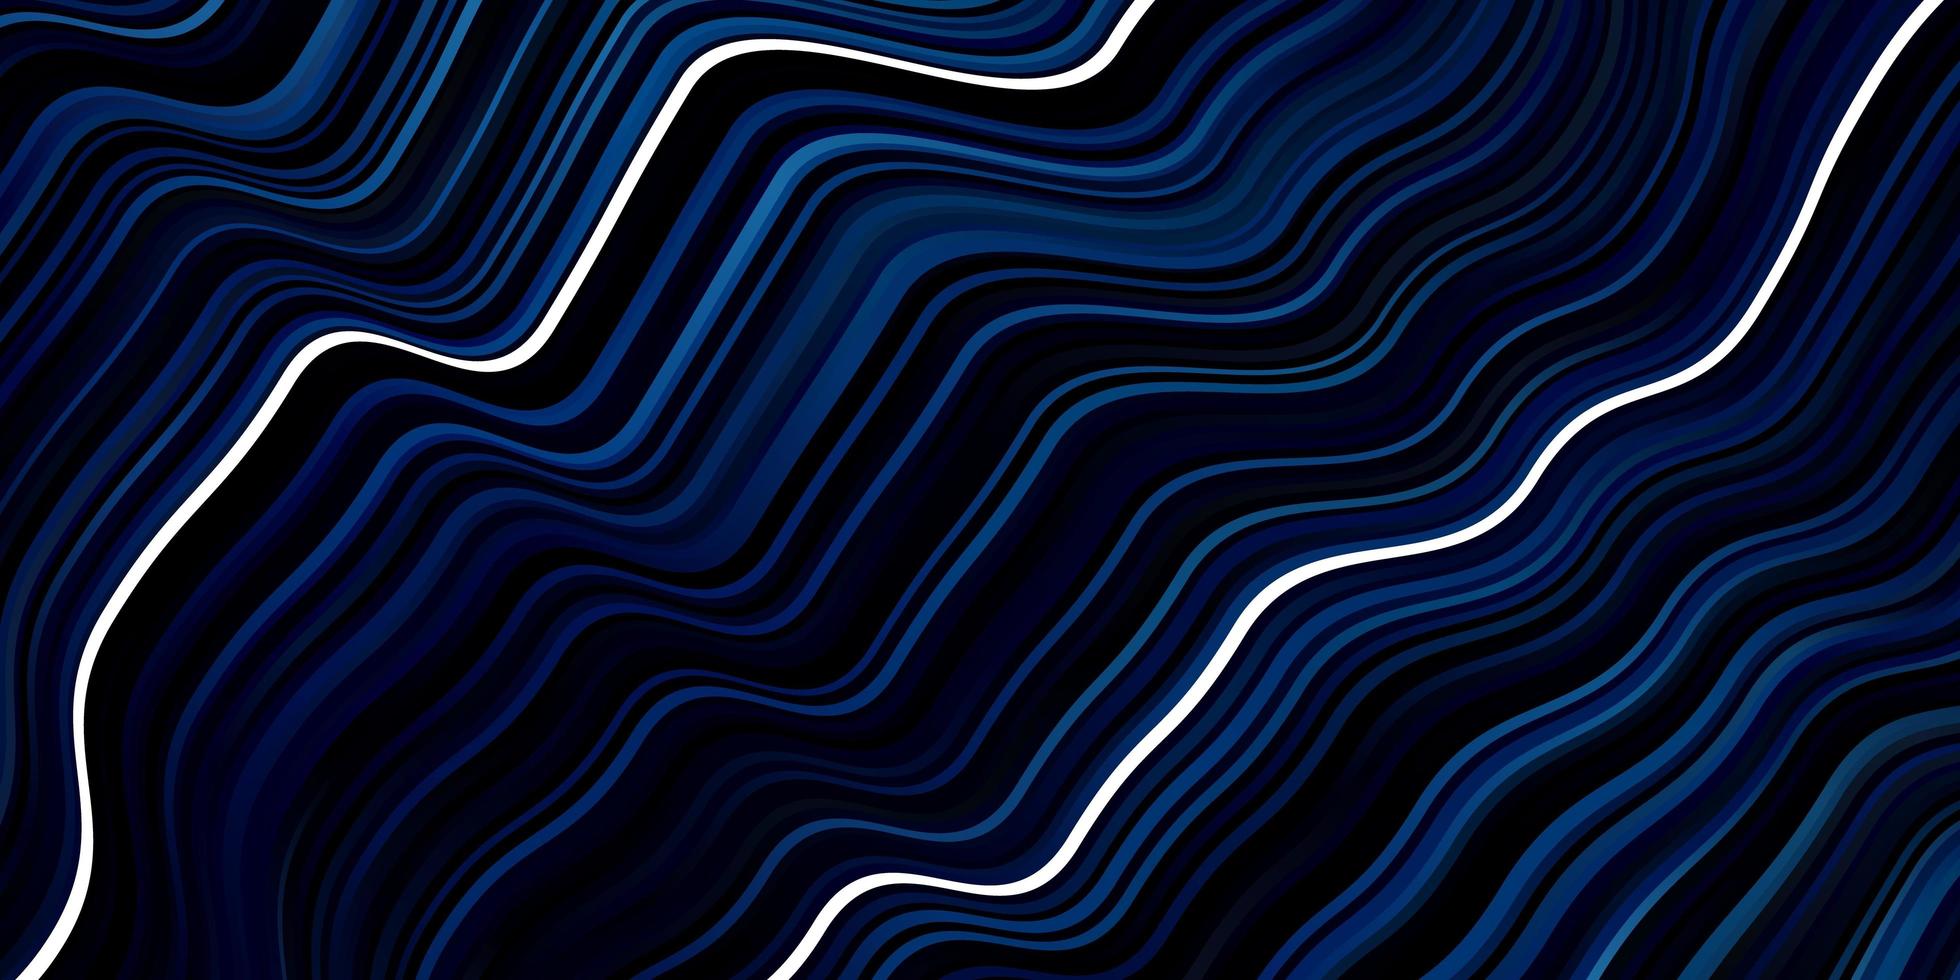 ljusblå vektor bakgrund med linjer.